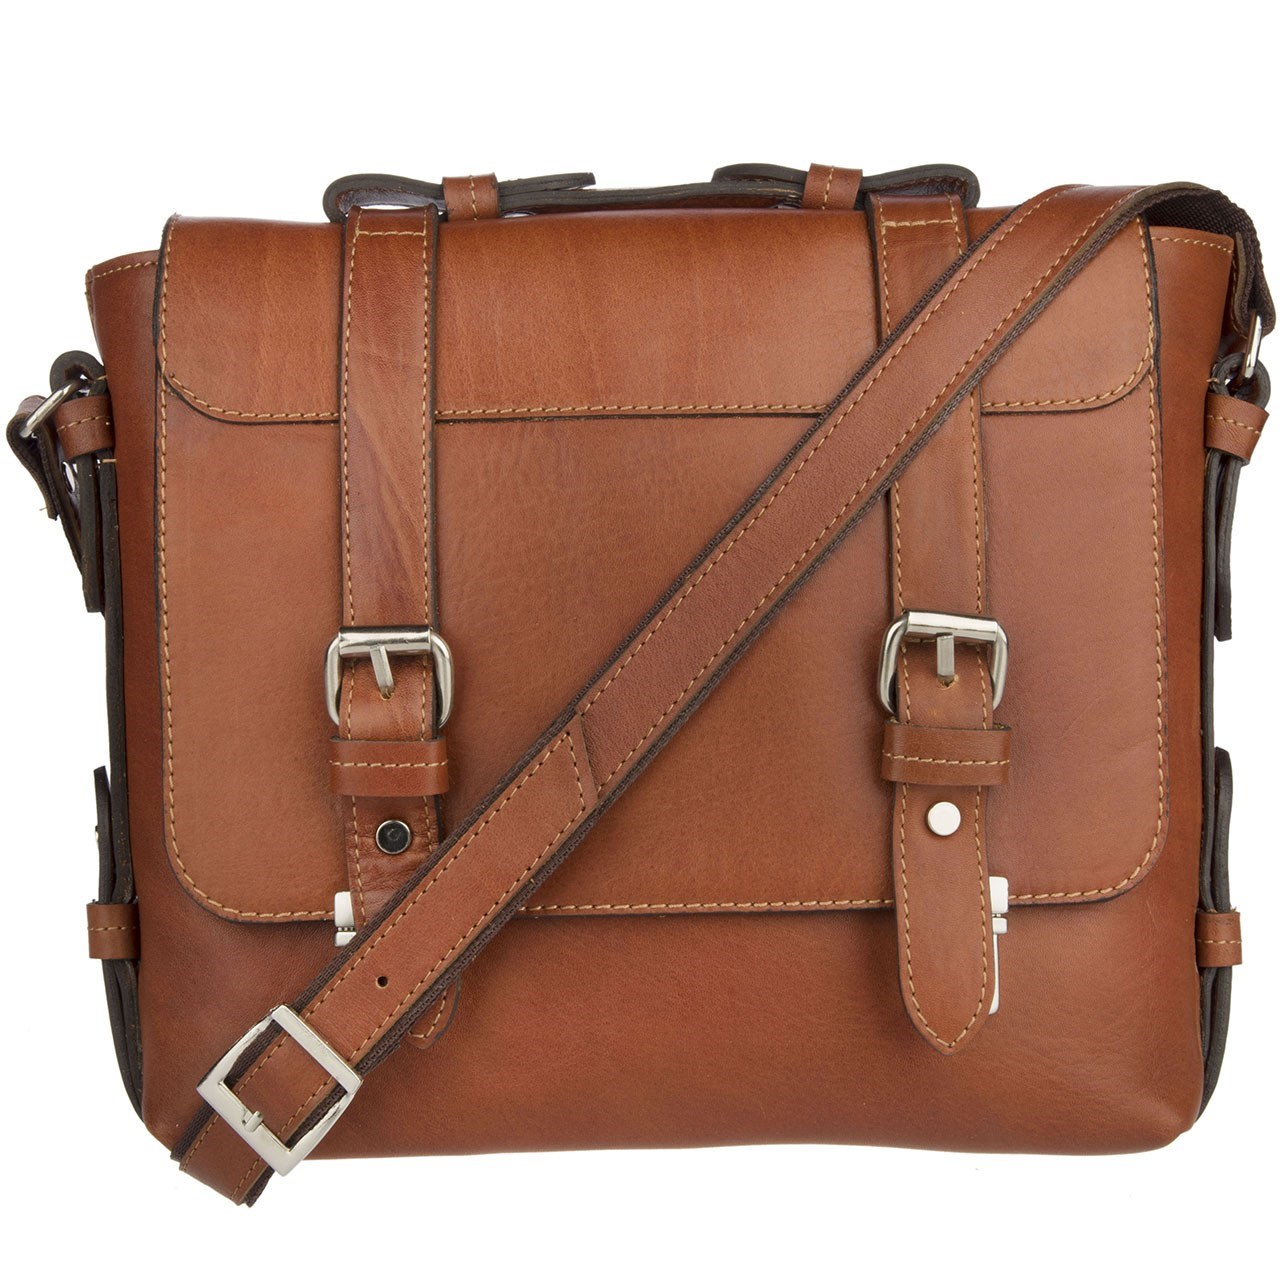 MANDEGARCHARM gallery natural leather satchel, Model sport 136004